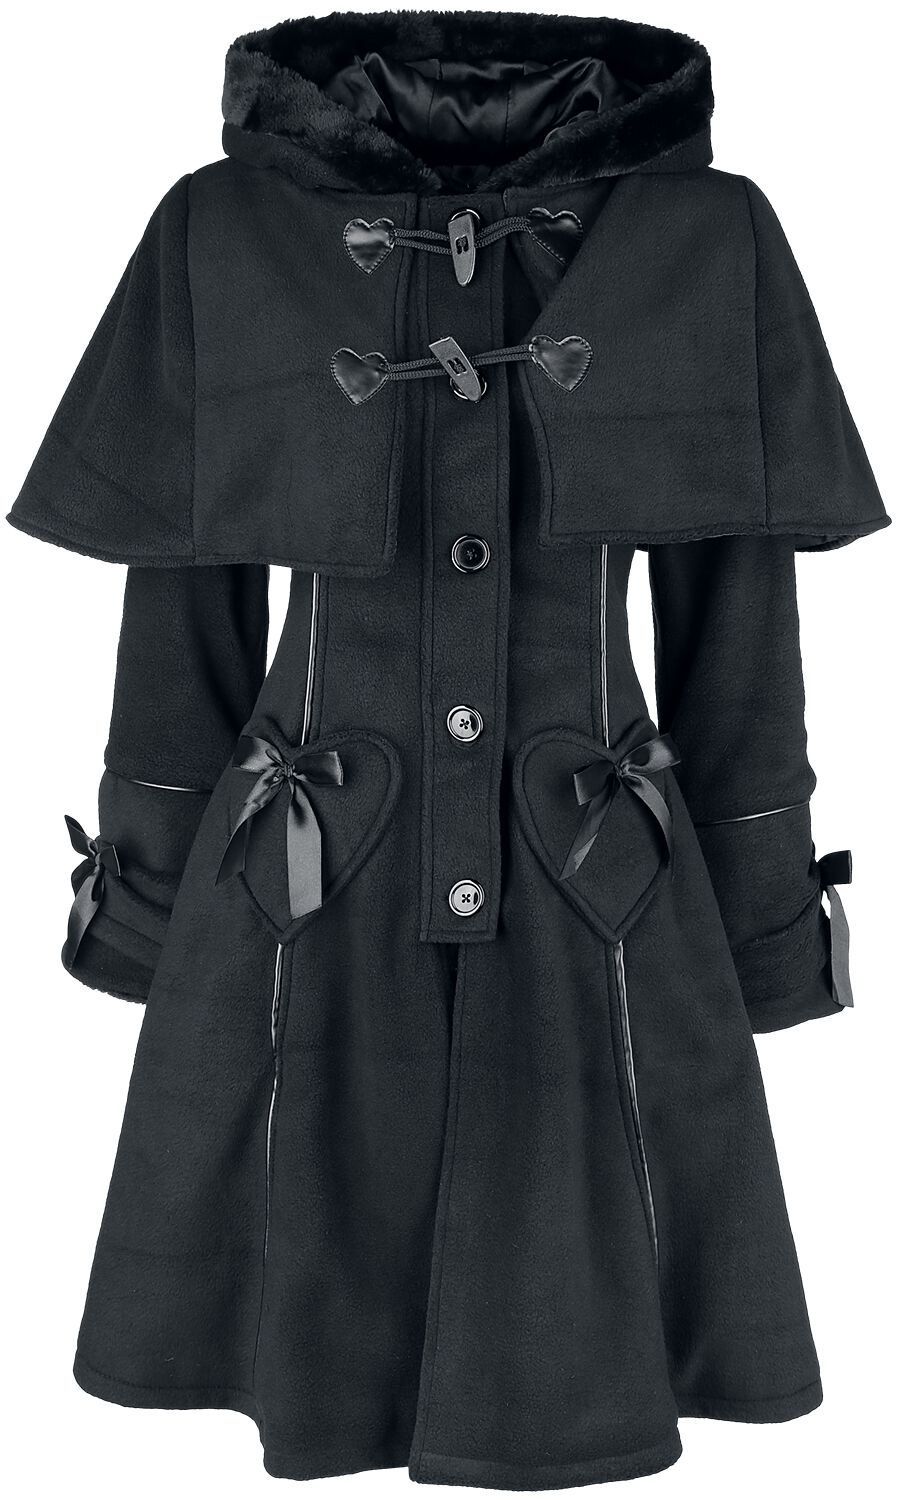 Poizen Industries Edelmina Coat Mantel schwarz in L